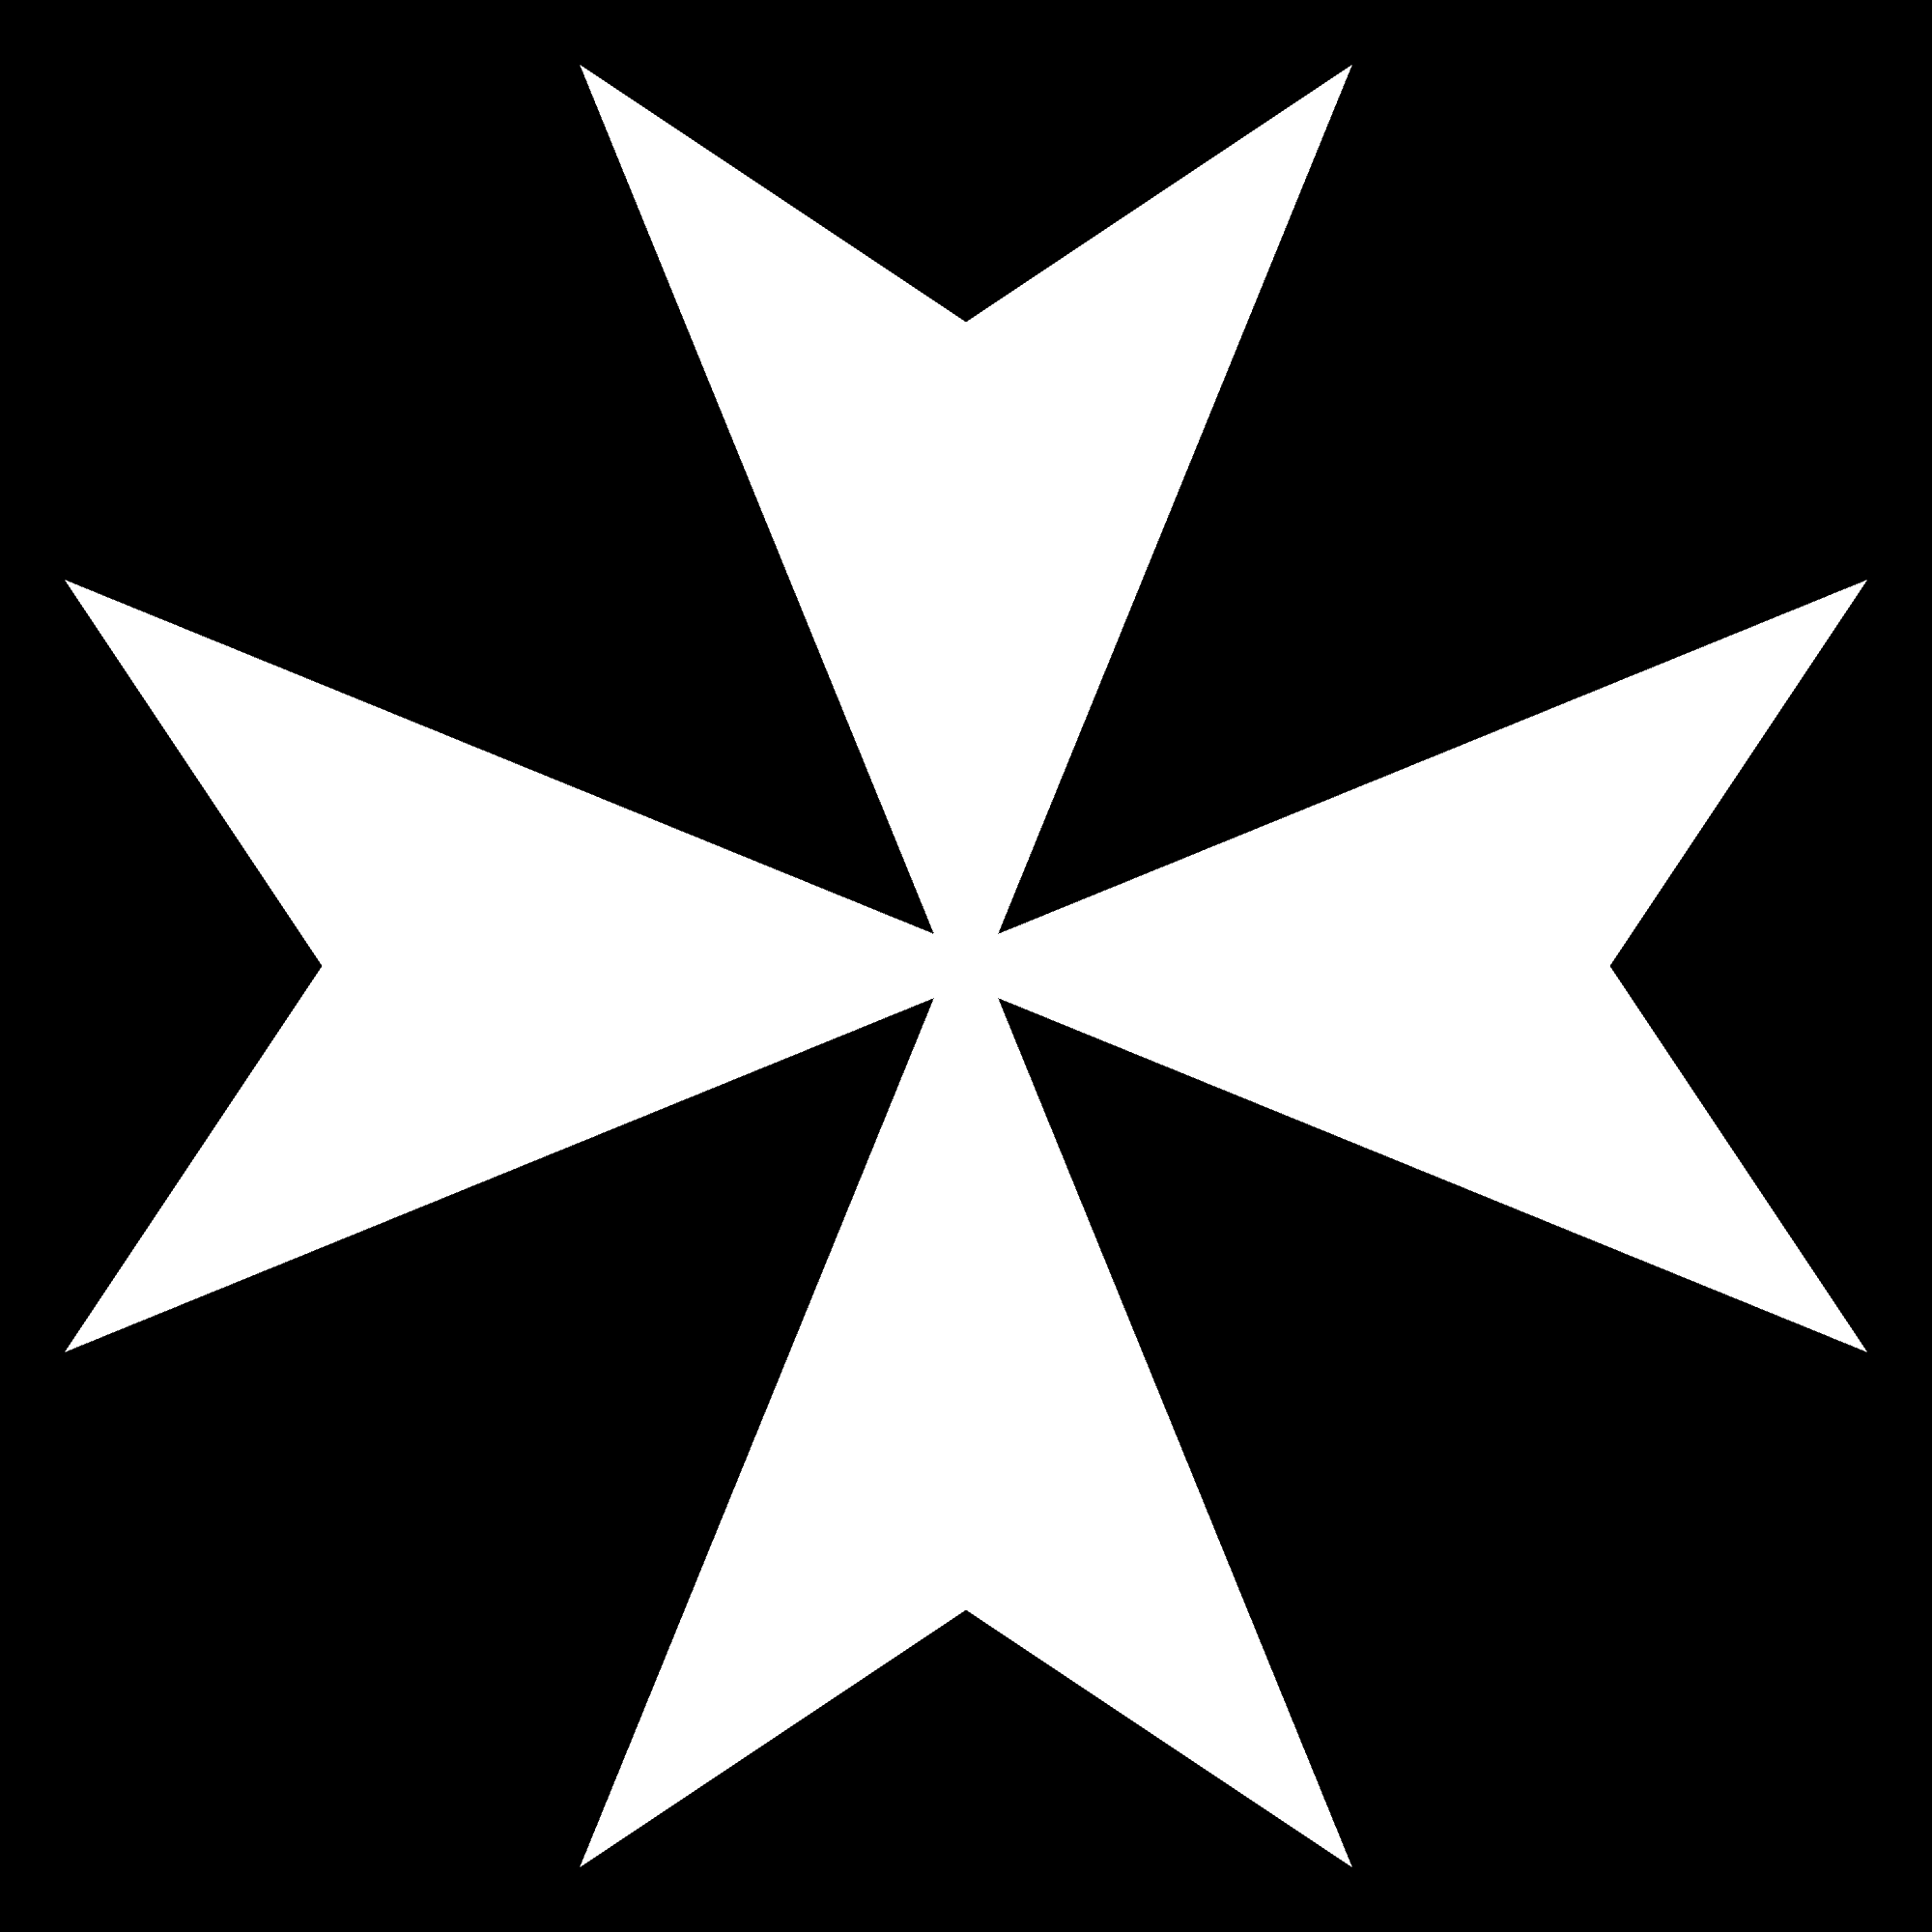 symbol of a knight